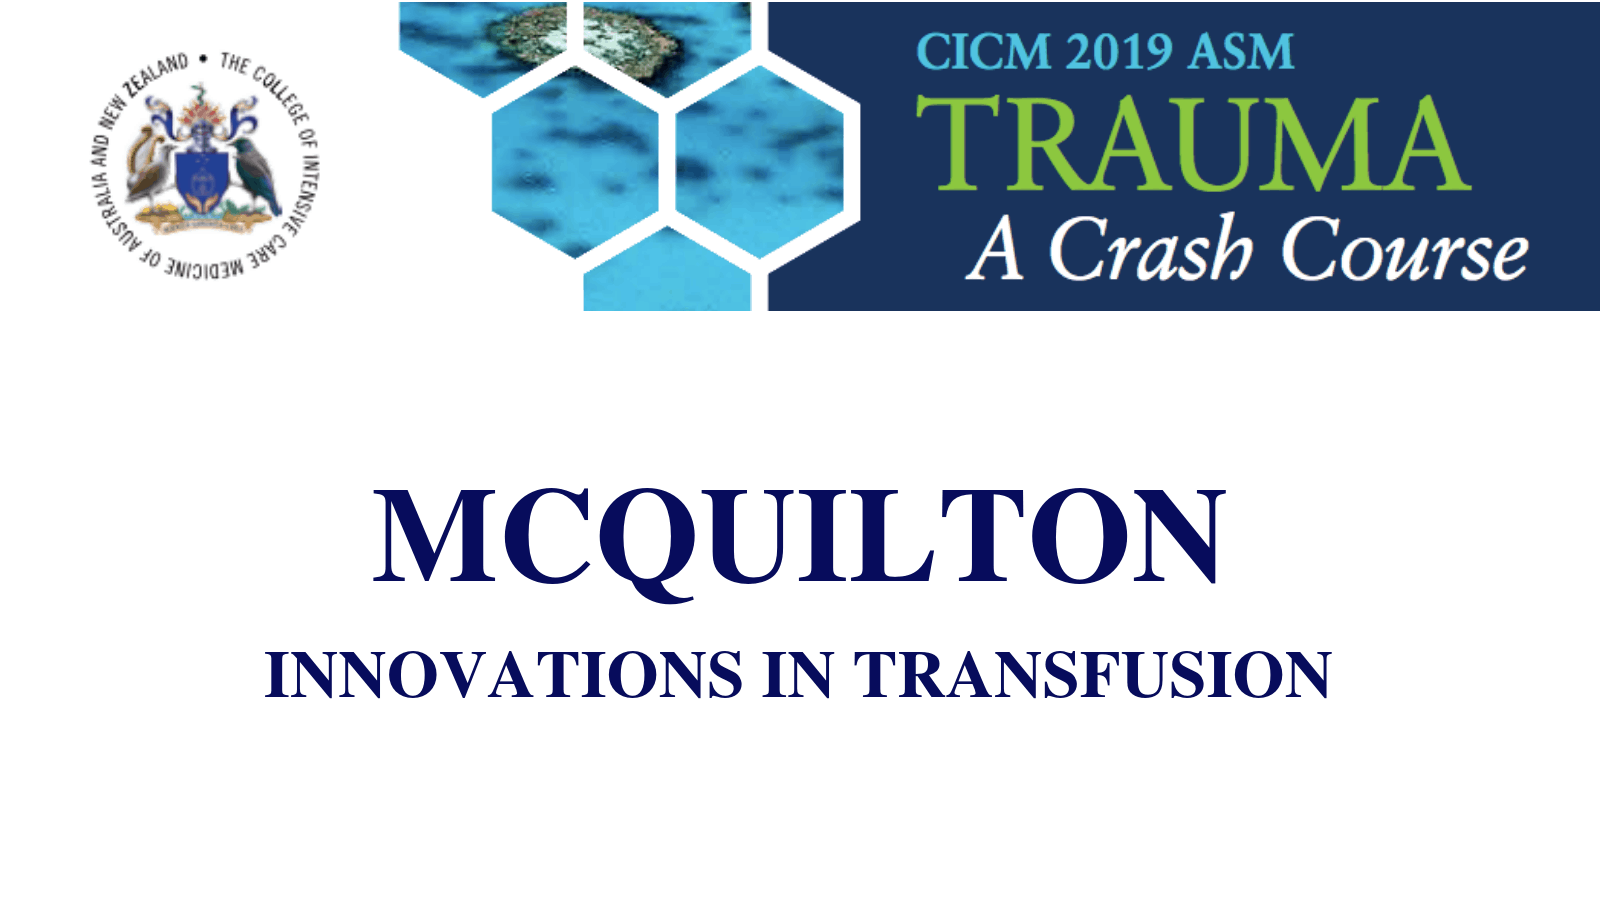 Innovations in transfusion